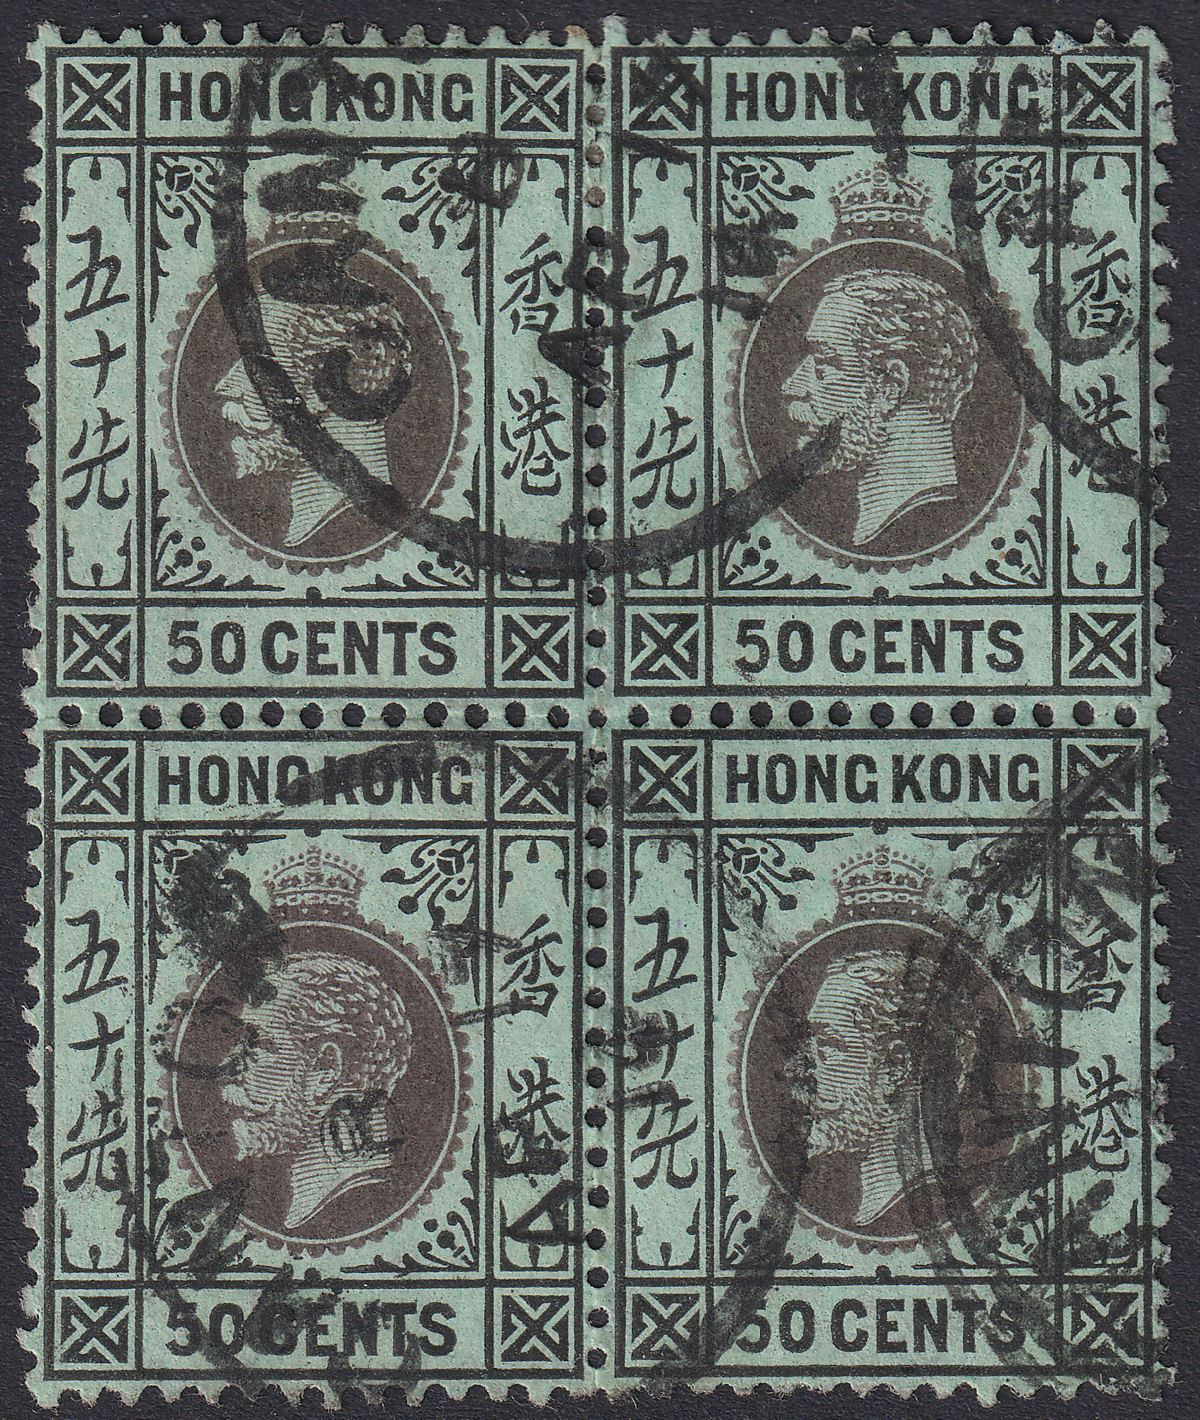 Hong Kong 1914 KGV 50c Black on Green Block Used w CANTON postmark SG Z232 c£40